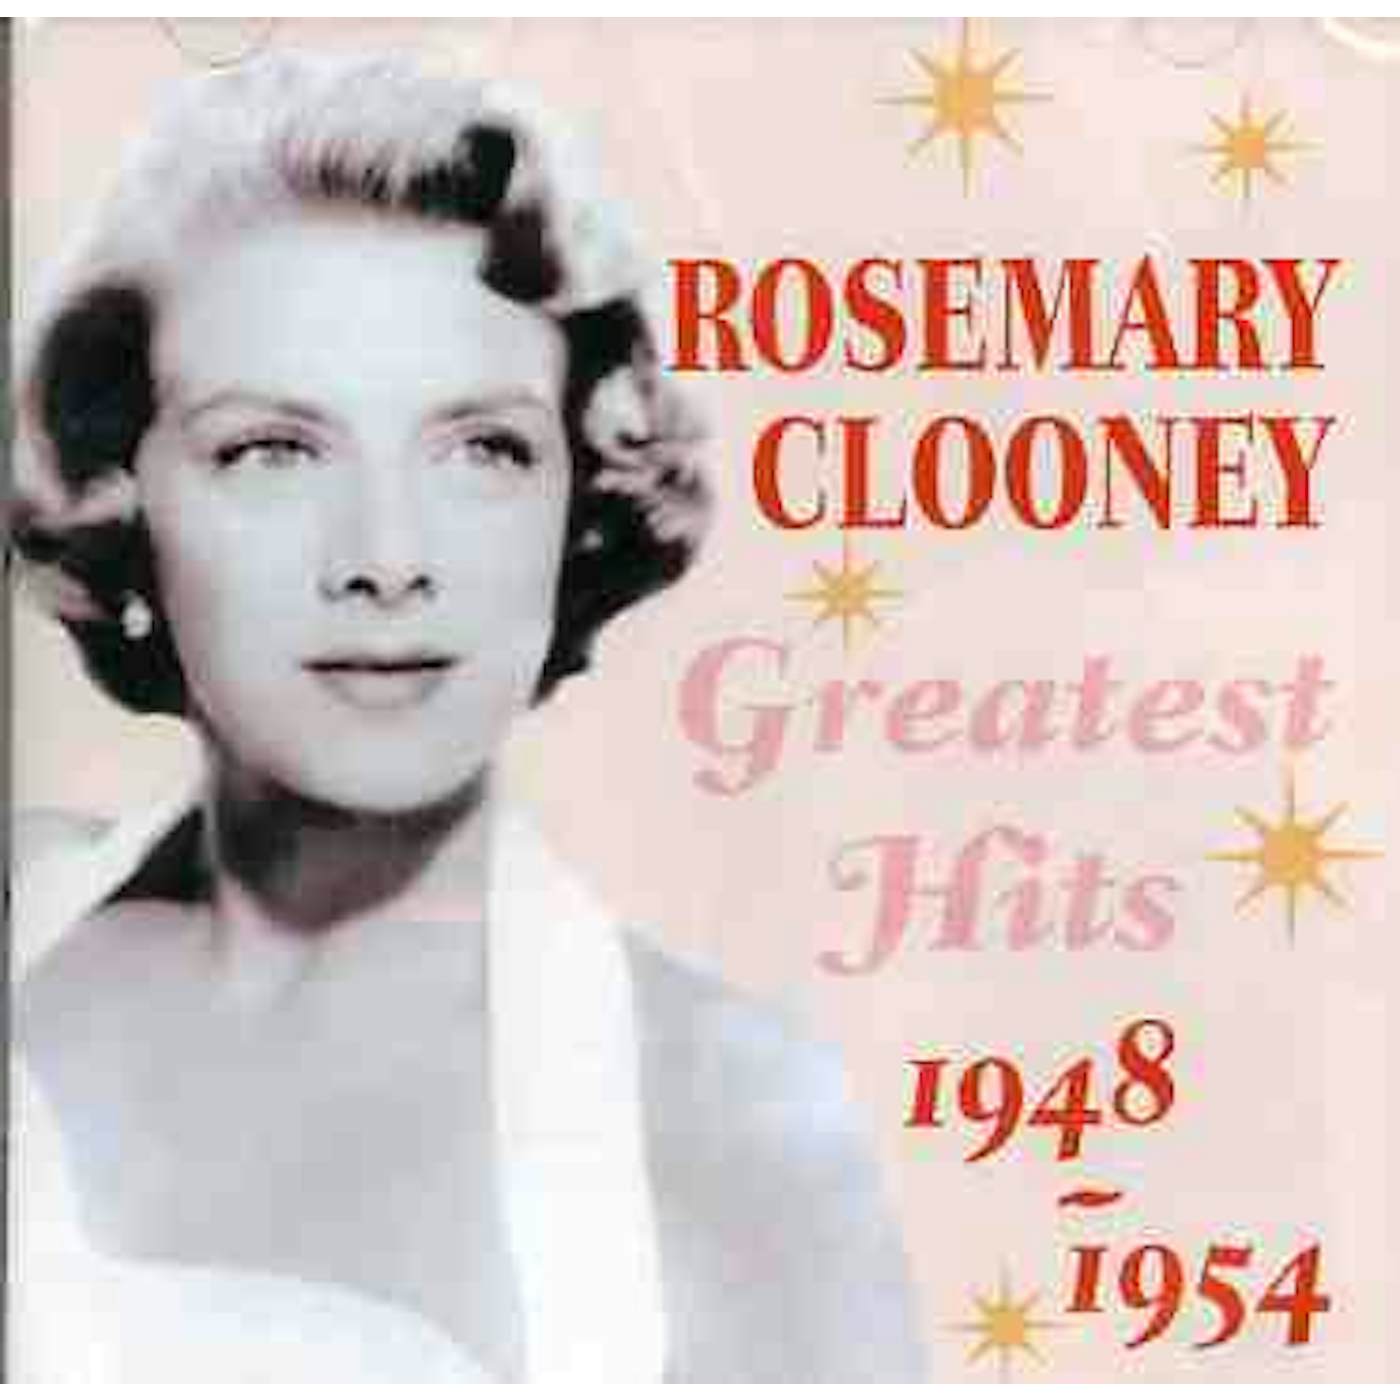 Rosemary Clooney GREATEST HITS 1948-1954 CD